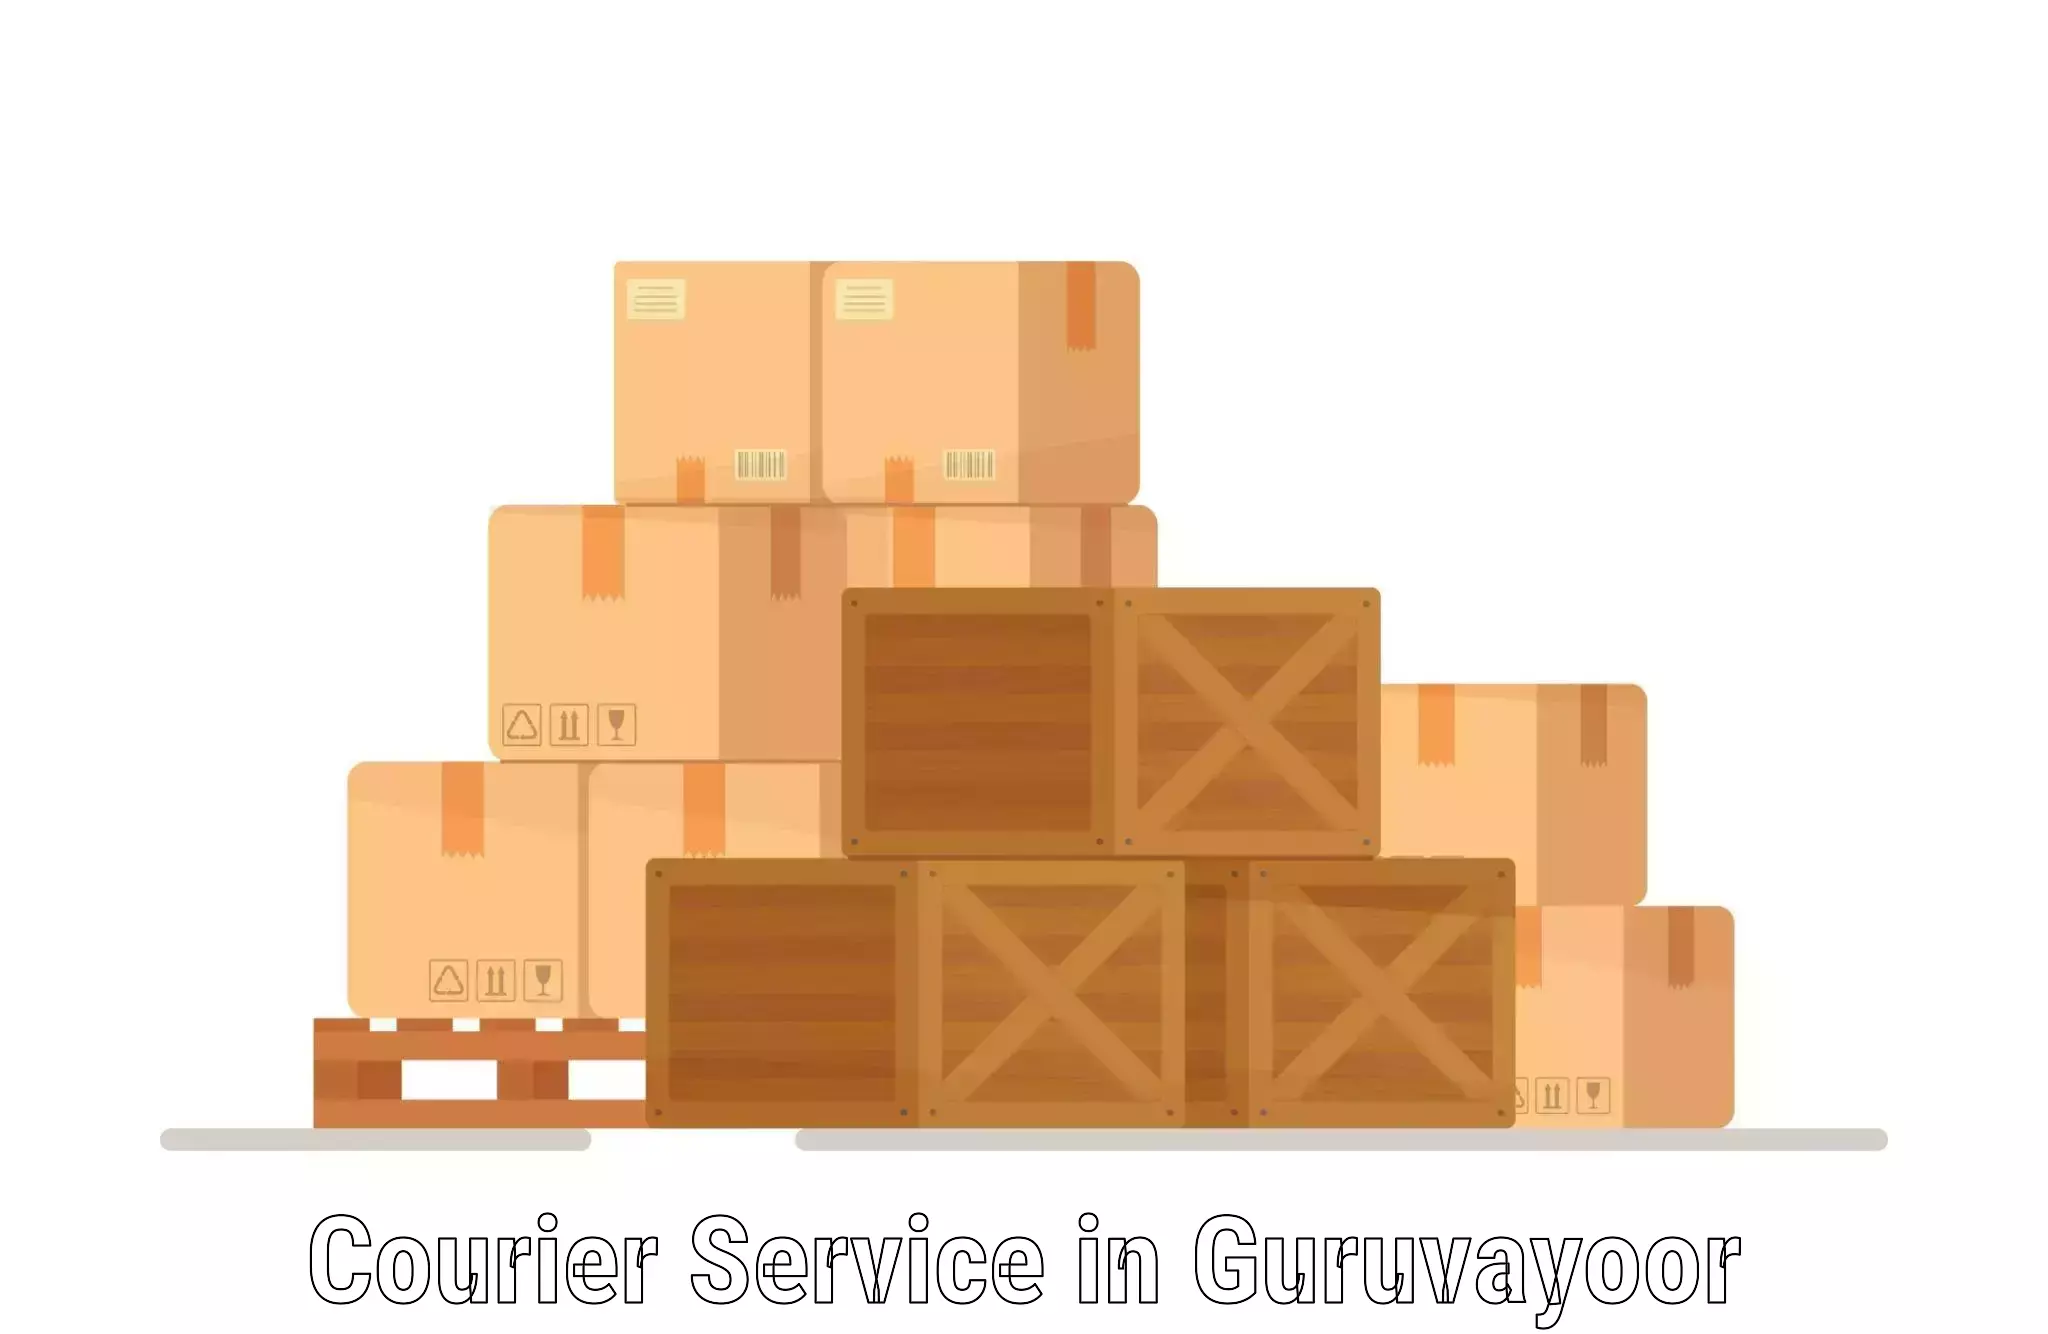 Sustainable delivery practices in Guruvayoor